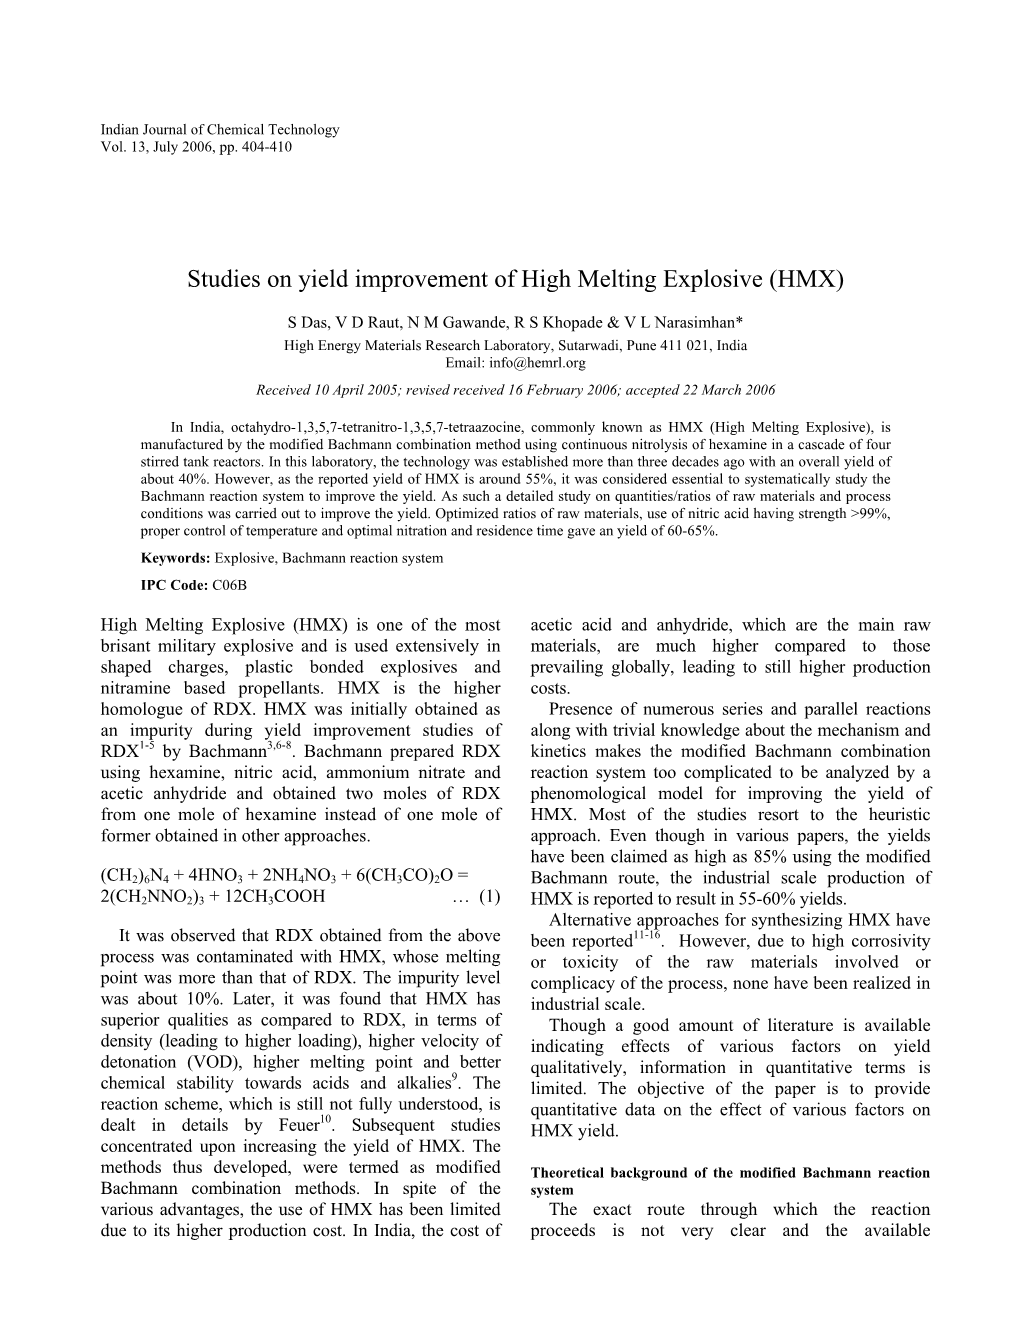 Studies on Yield Improvement of High Melting Explosive (HMX)